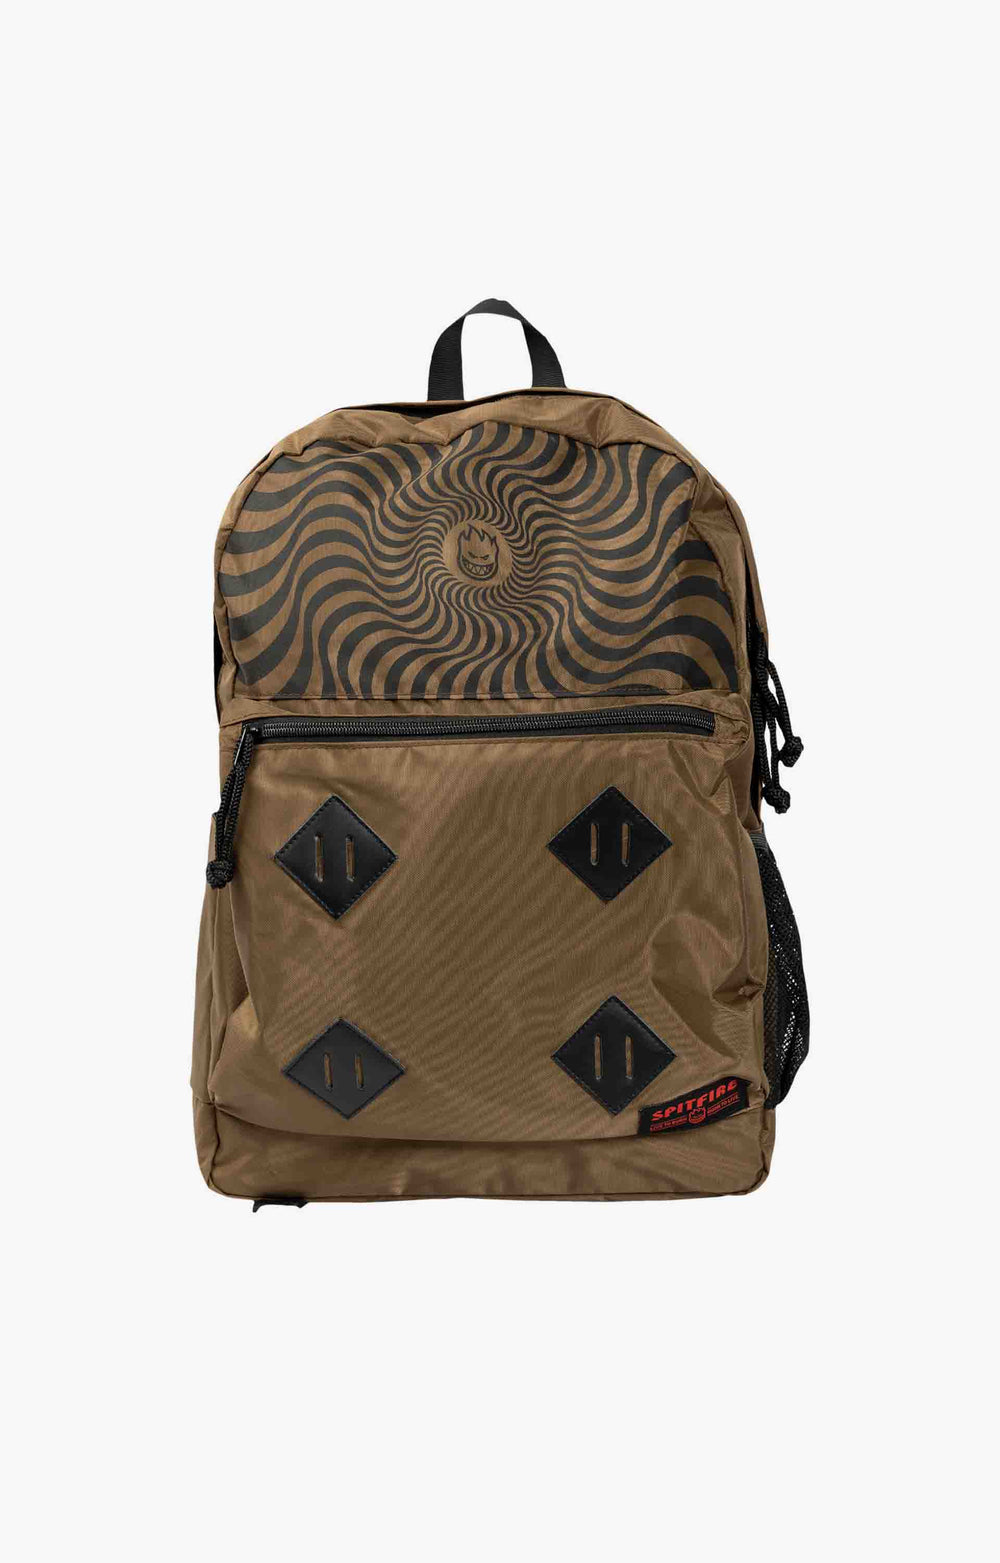 Spitfire Bighead Swirl Backpack Bags, Brown/Black